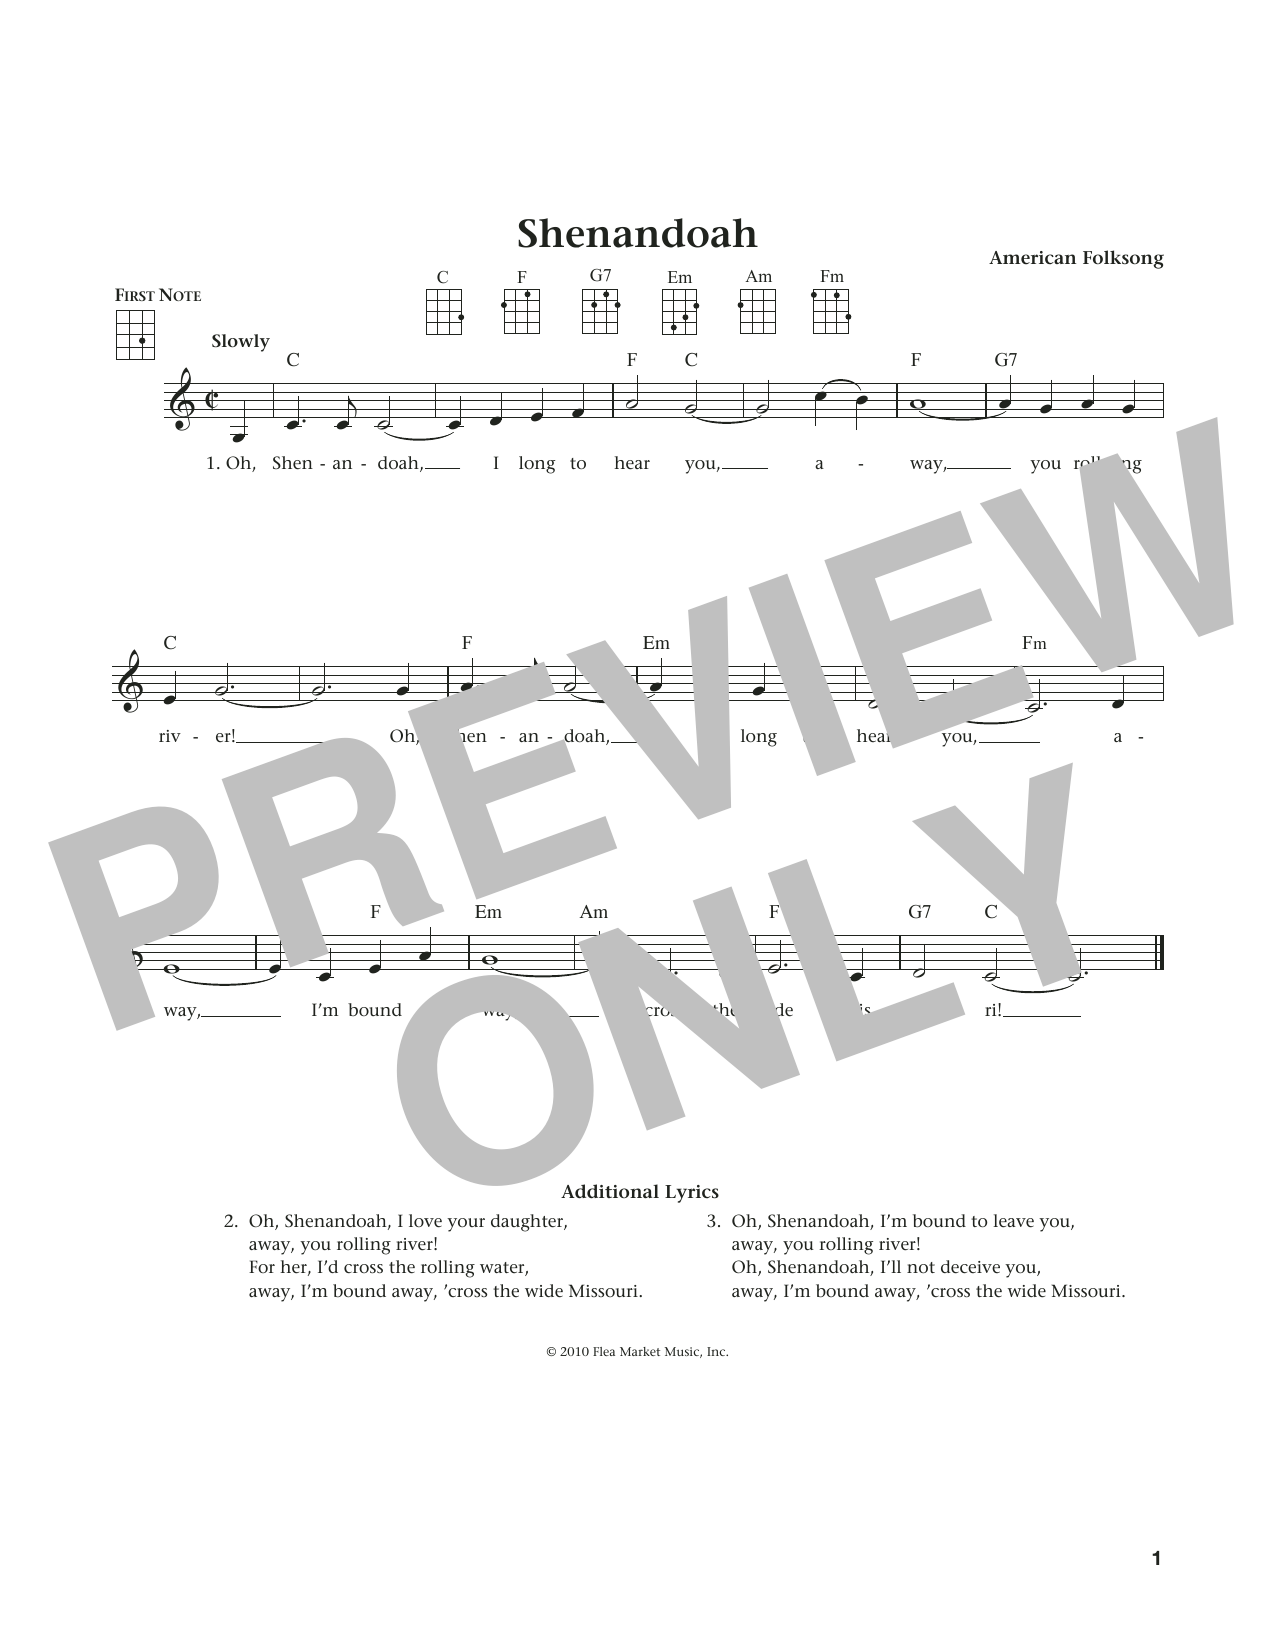 American Folksong Shenandoah (from The Daily Ukulele) (arr. Liz and Jim Beloff) Sheet Music Notes & Chords for Ukulele - Download or Print PDF